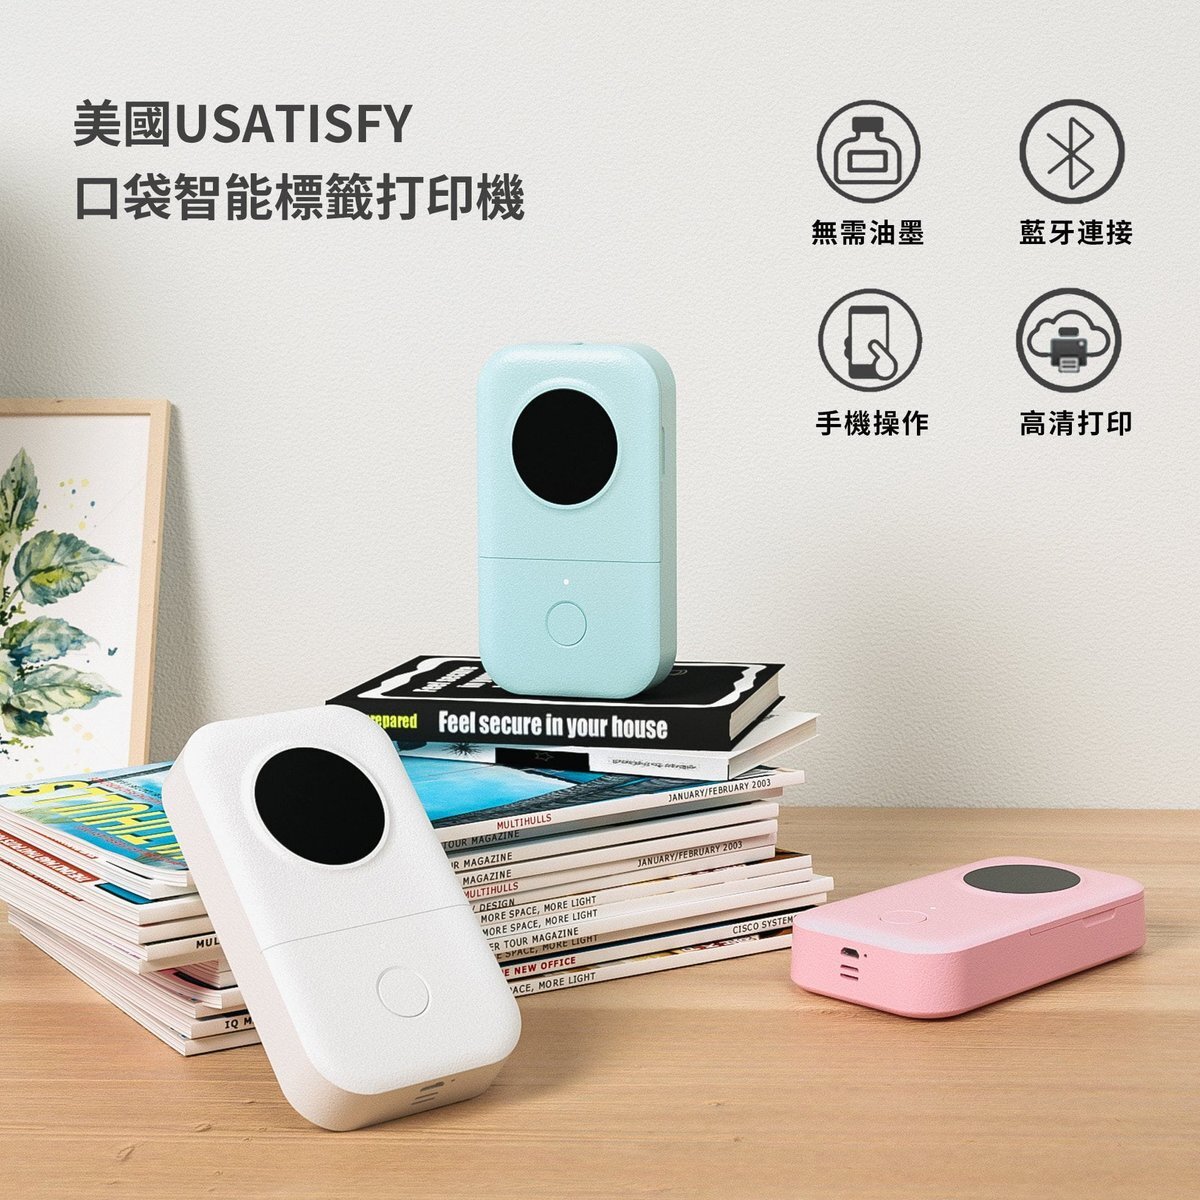 Usatisfy - American pocket smart label printer D30 (free 2 rolls of white label paper) [Licensed in Hong Kong]